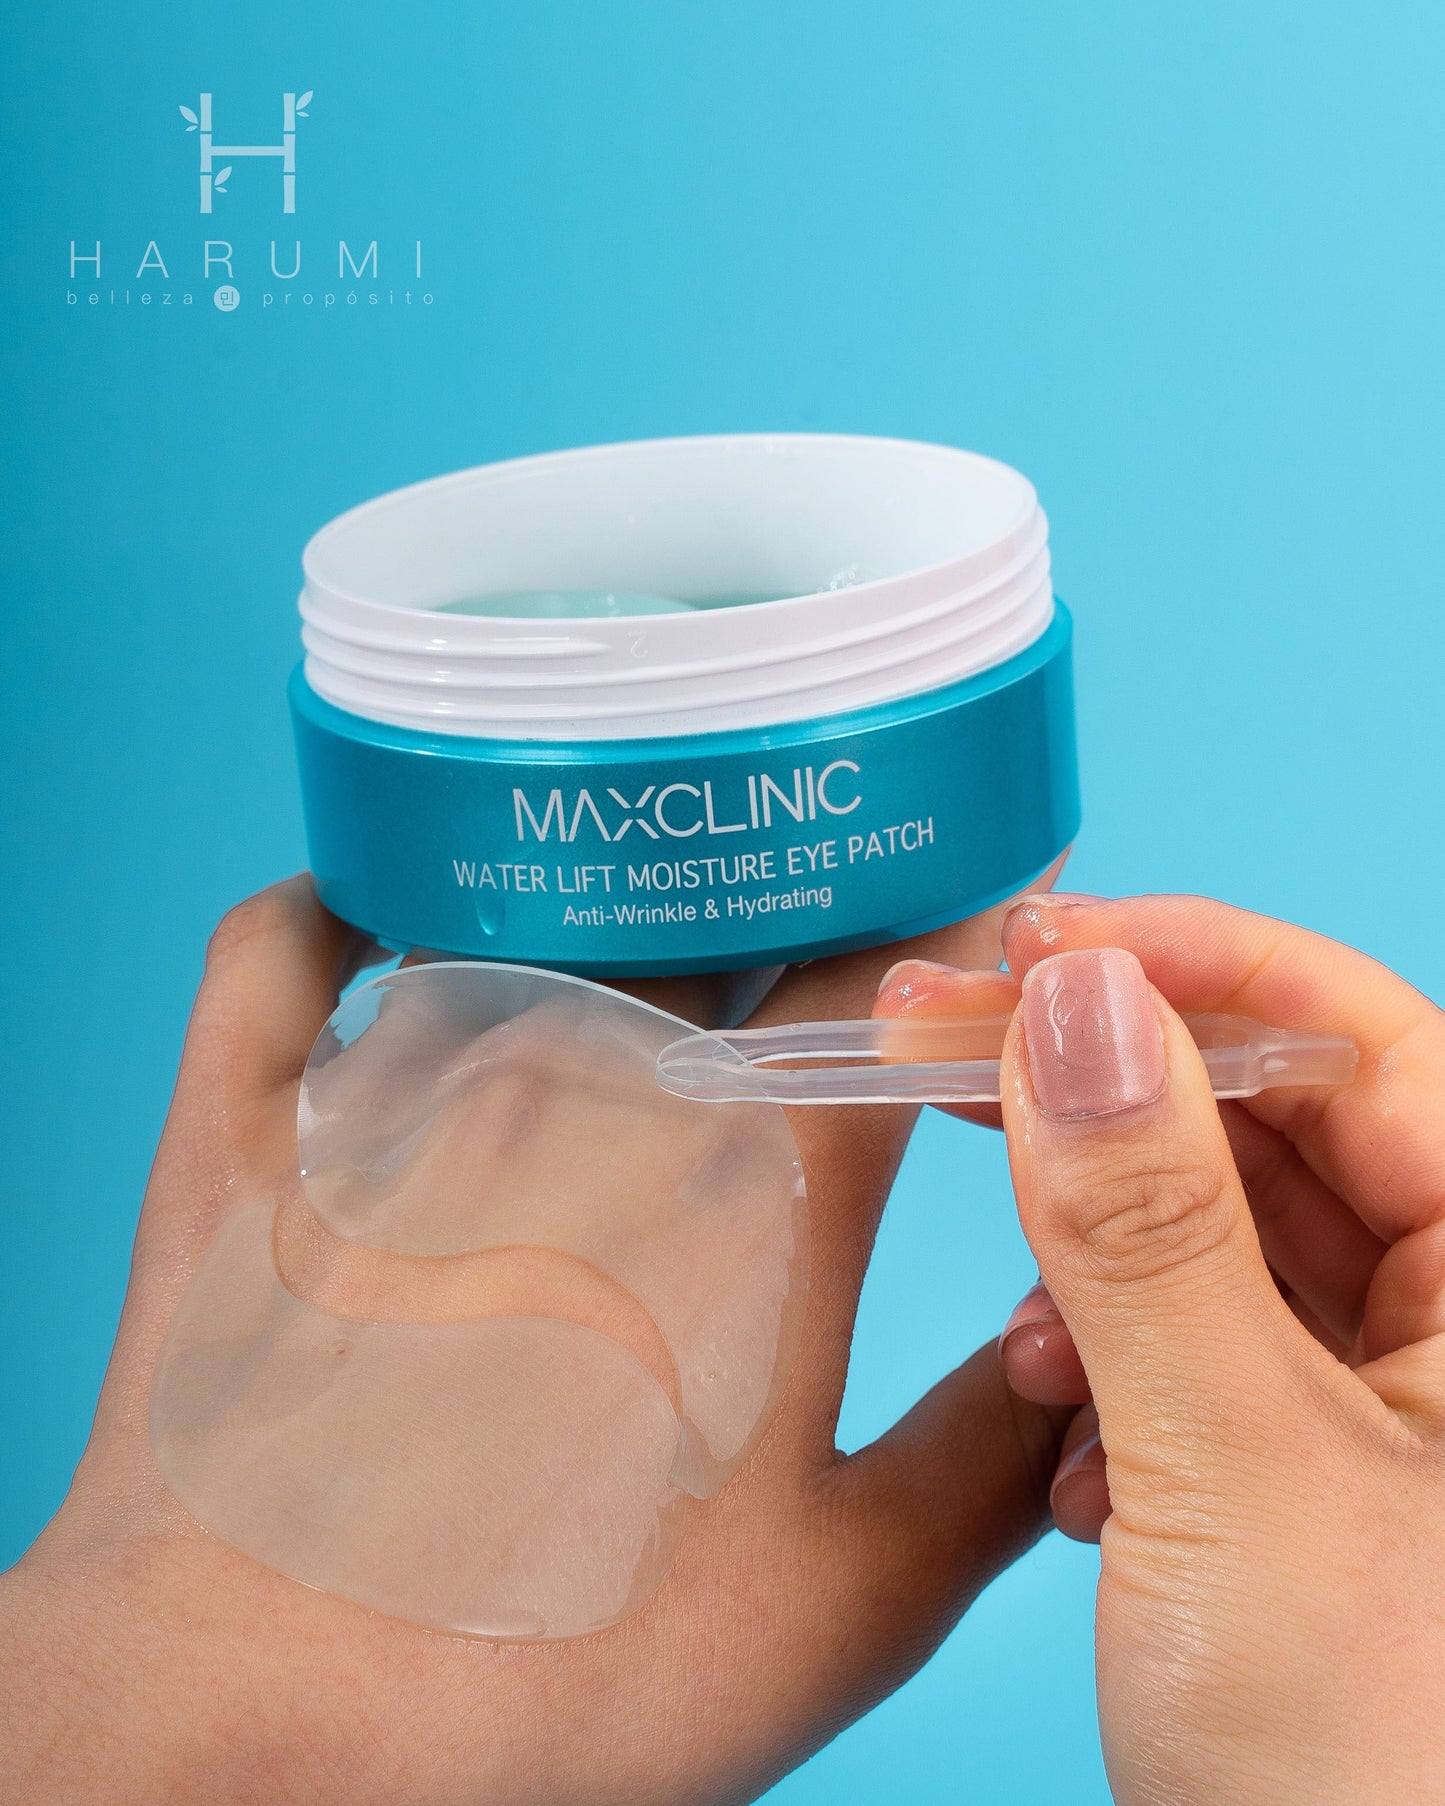 Maxclinic Water Lift Moisture Eye Patch Skincare maquillaje productos de belleza coreanos en Colombia kbeauty